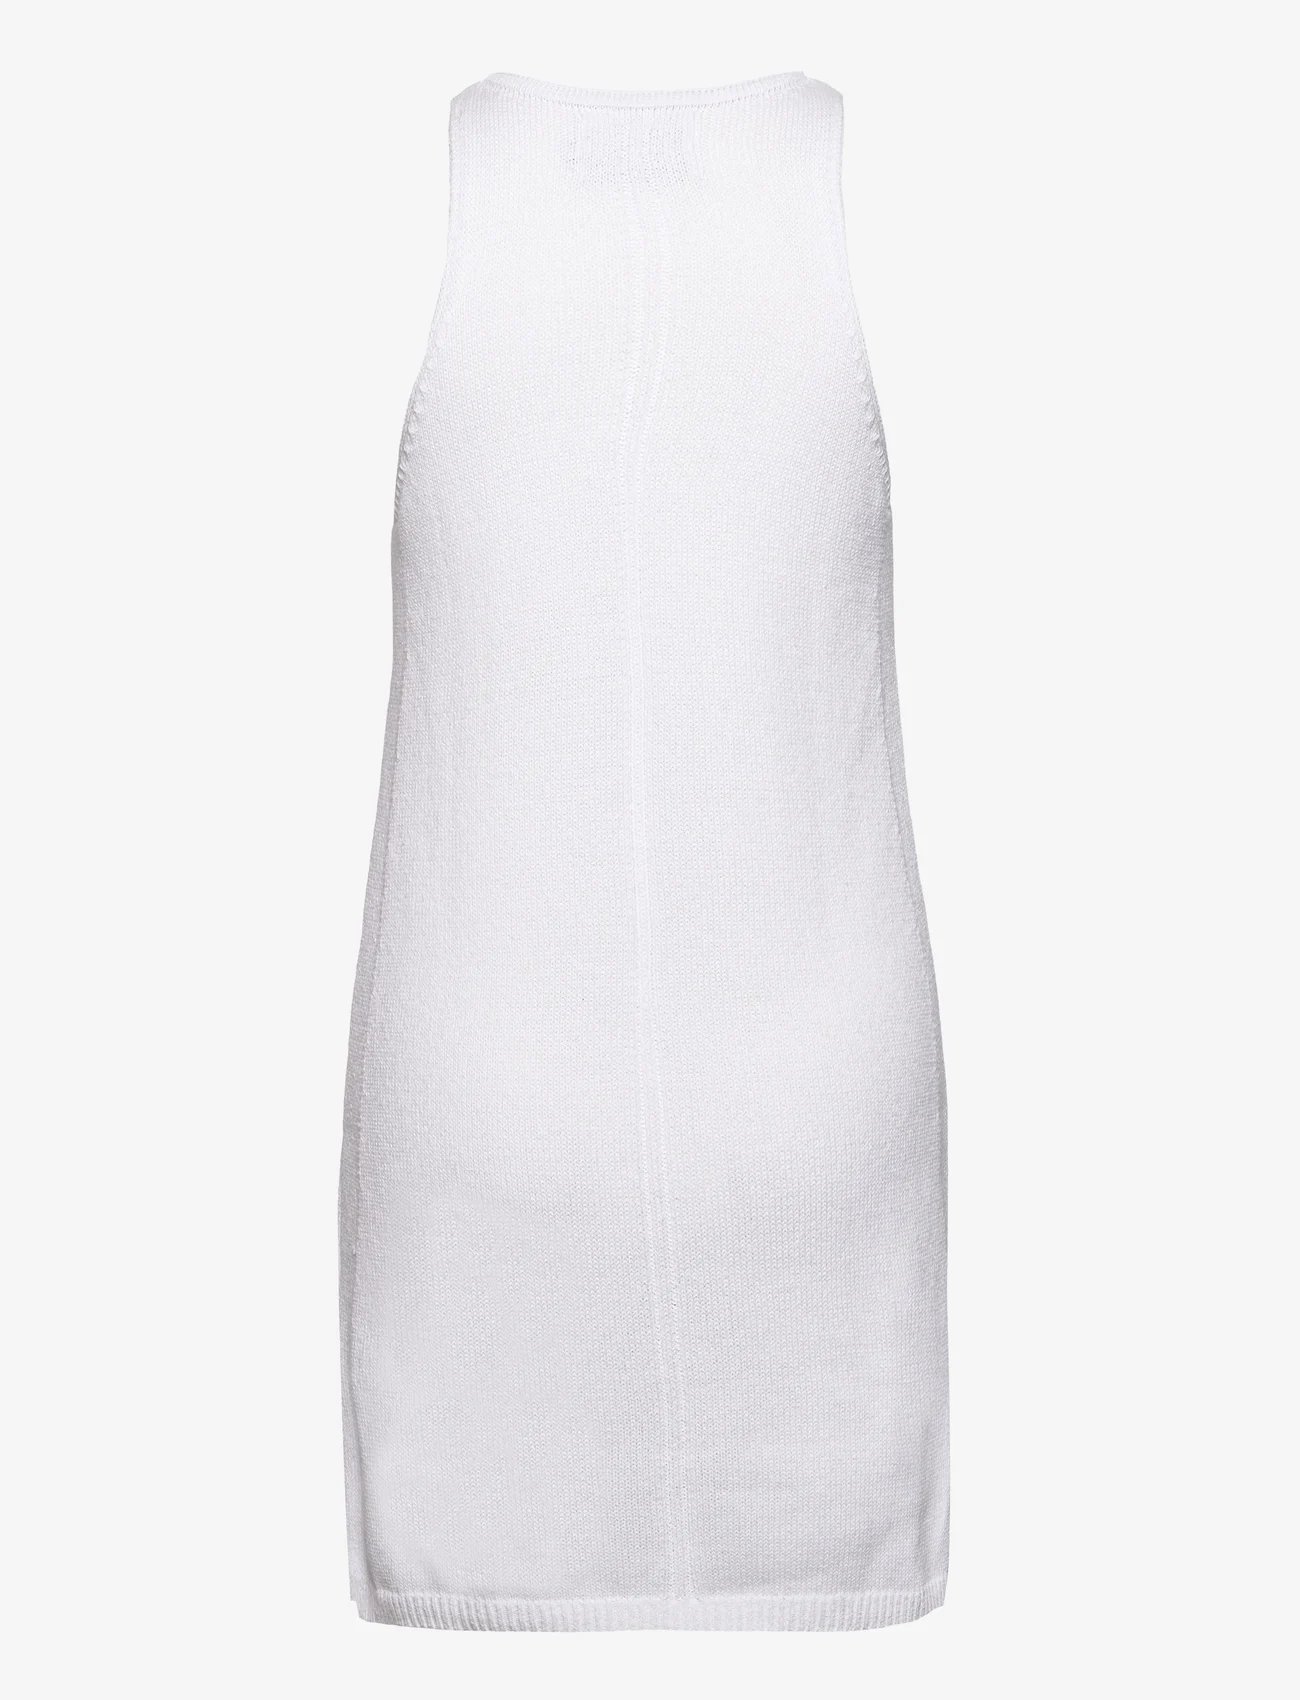 Calvin Klein Jeans - KNITTED TANK DRESS - strickkleider - bright white - 1